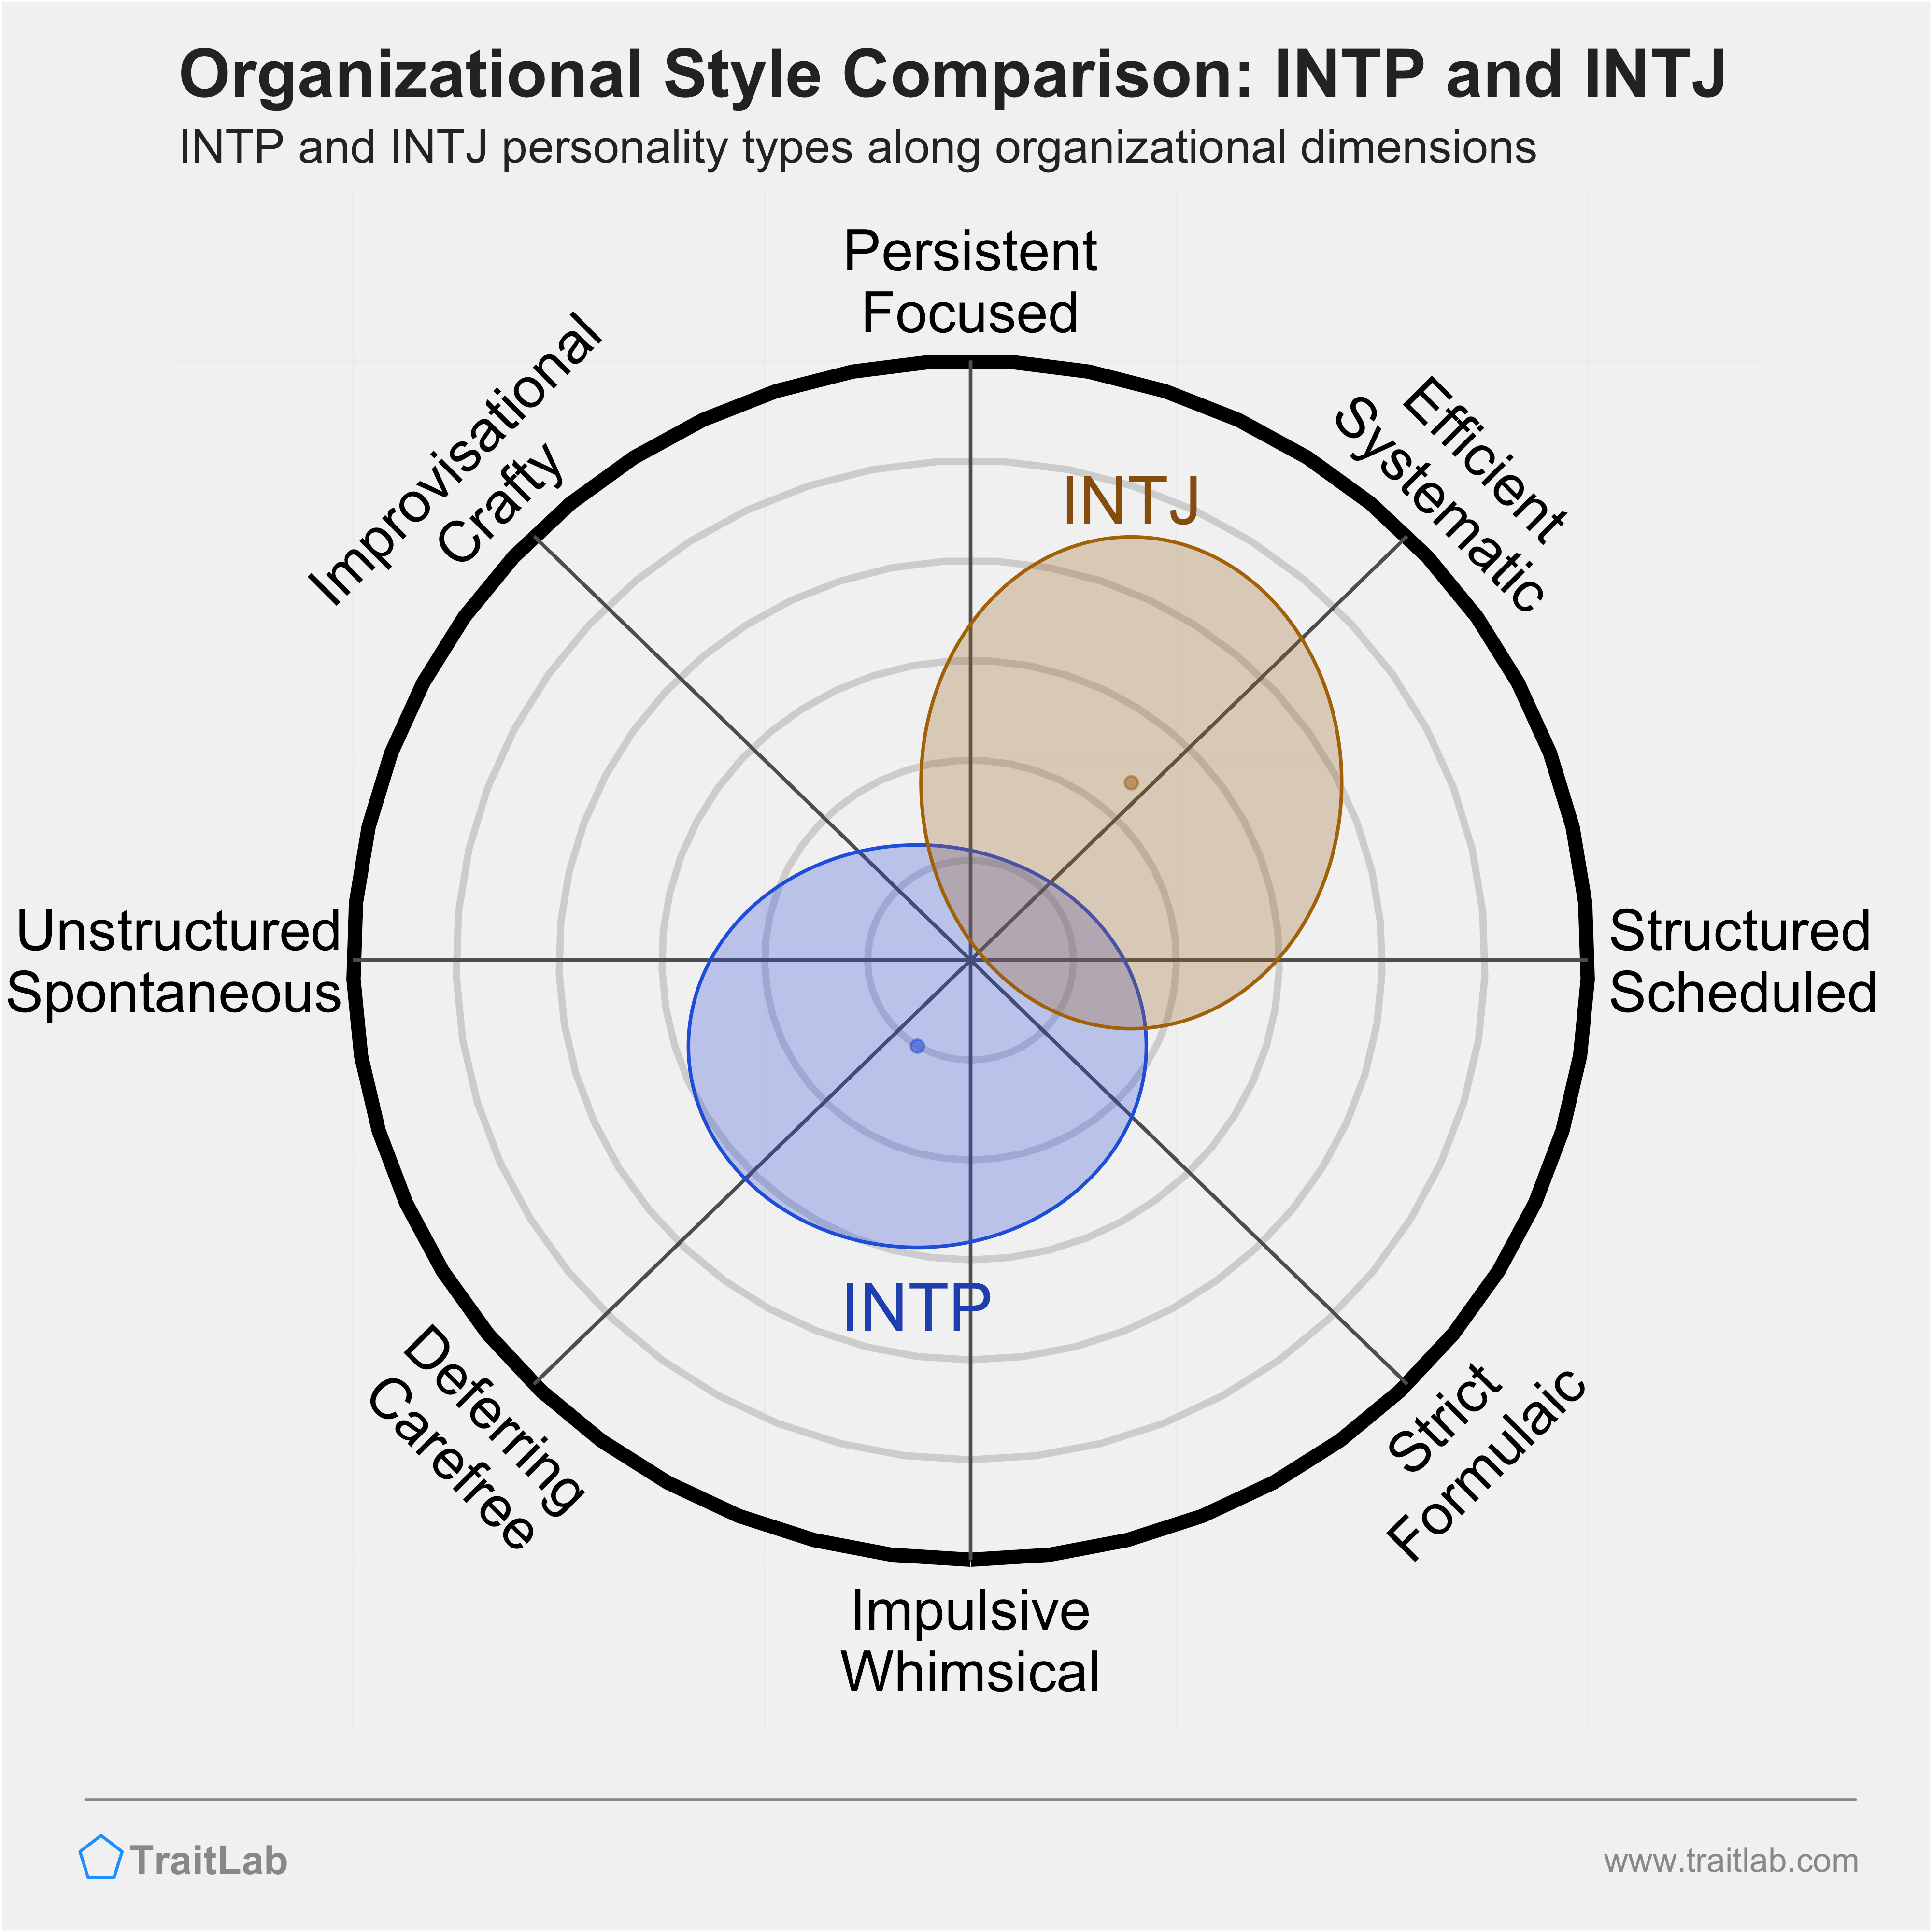 INTP and INTJ comparison across organizational dimensions